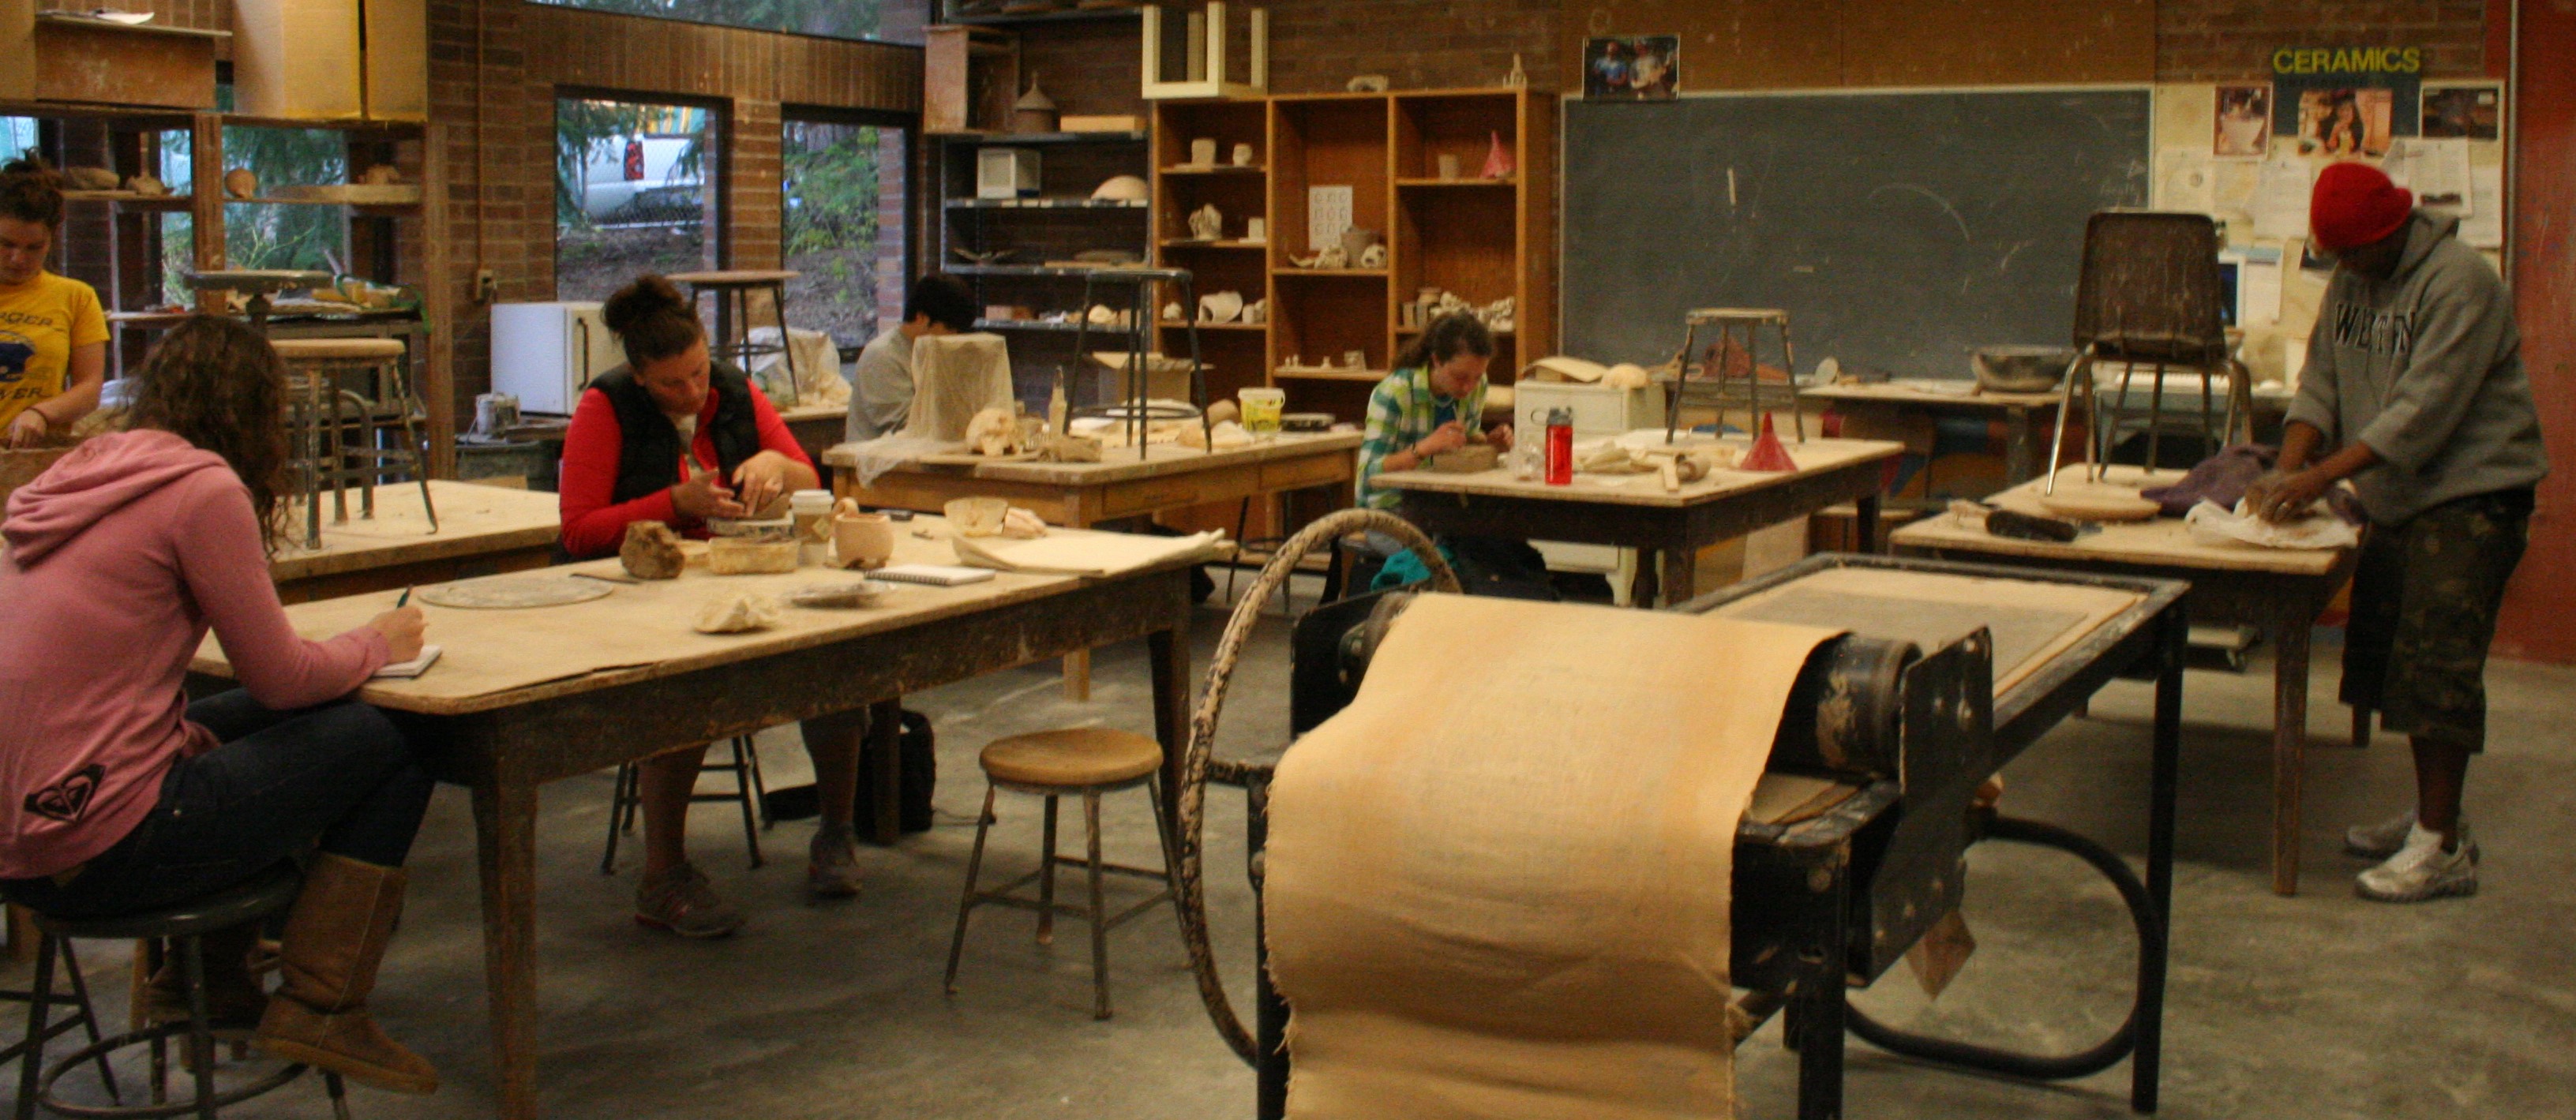 Students in a ceramics studio